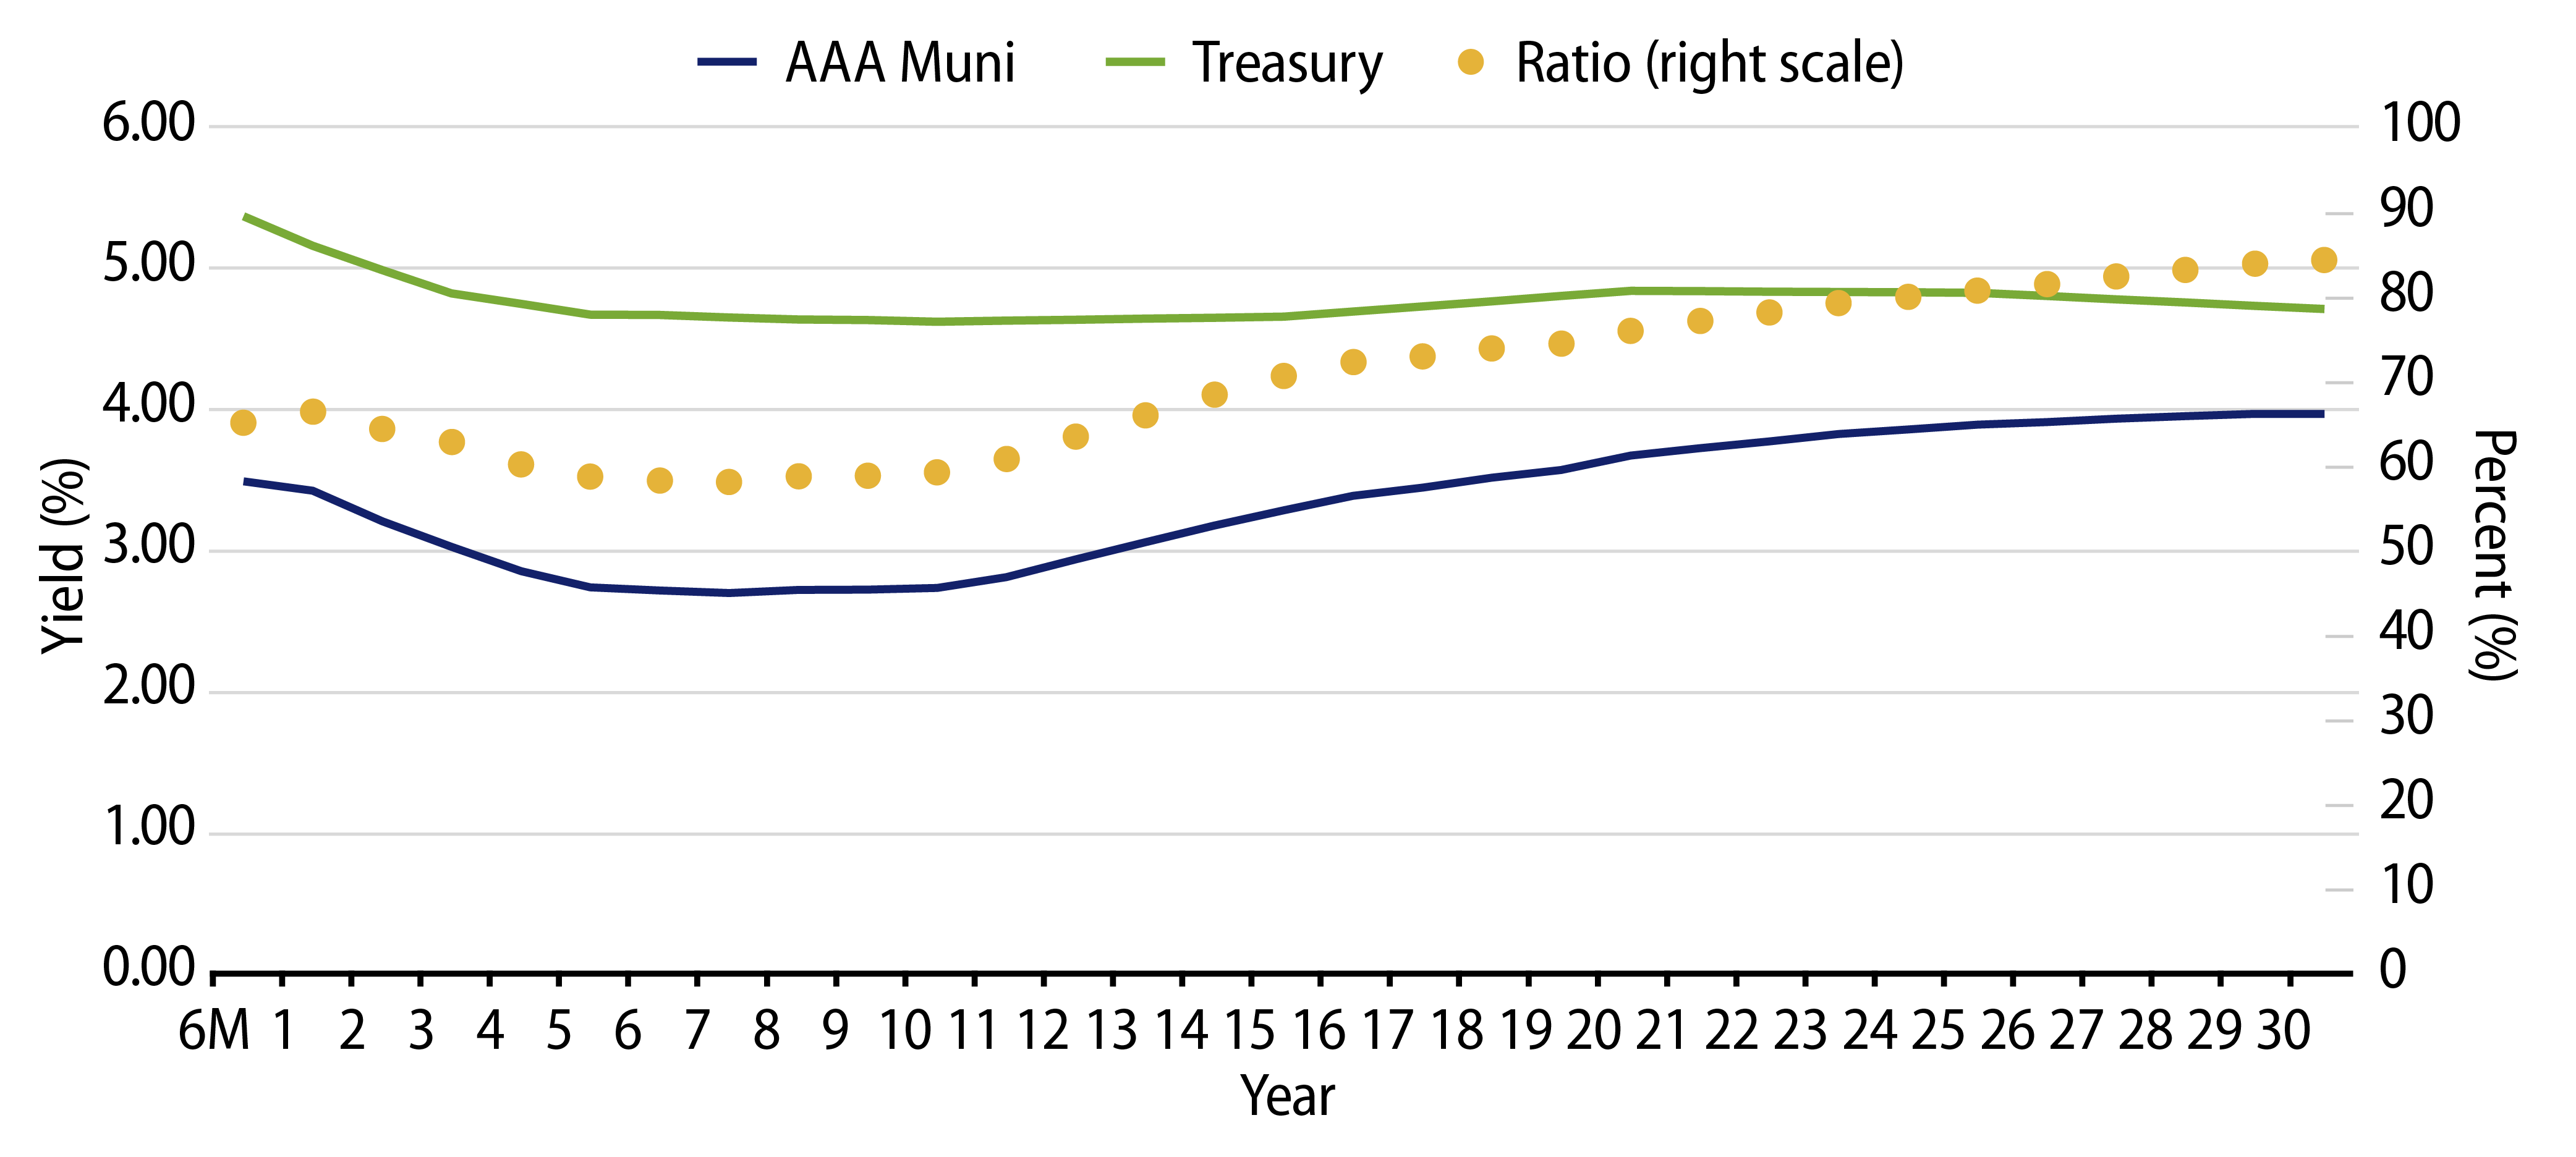 AAA Municipal vs. Treasury Yield Curves